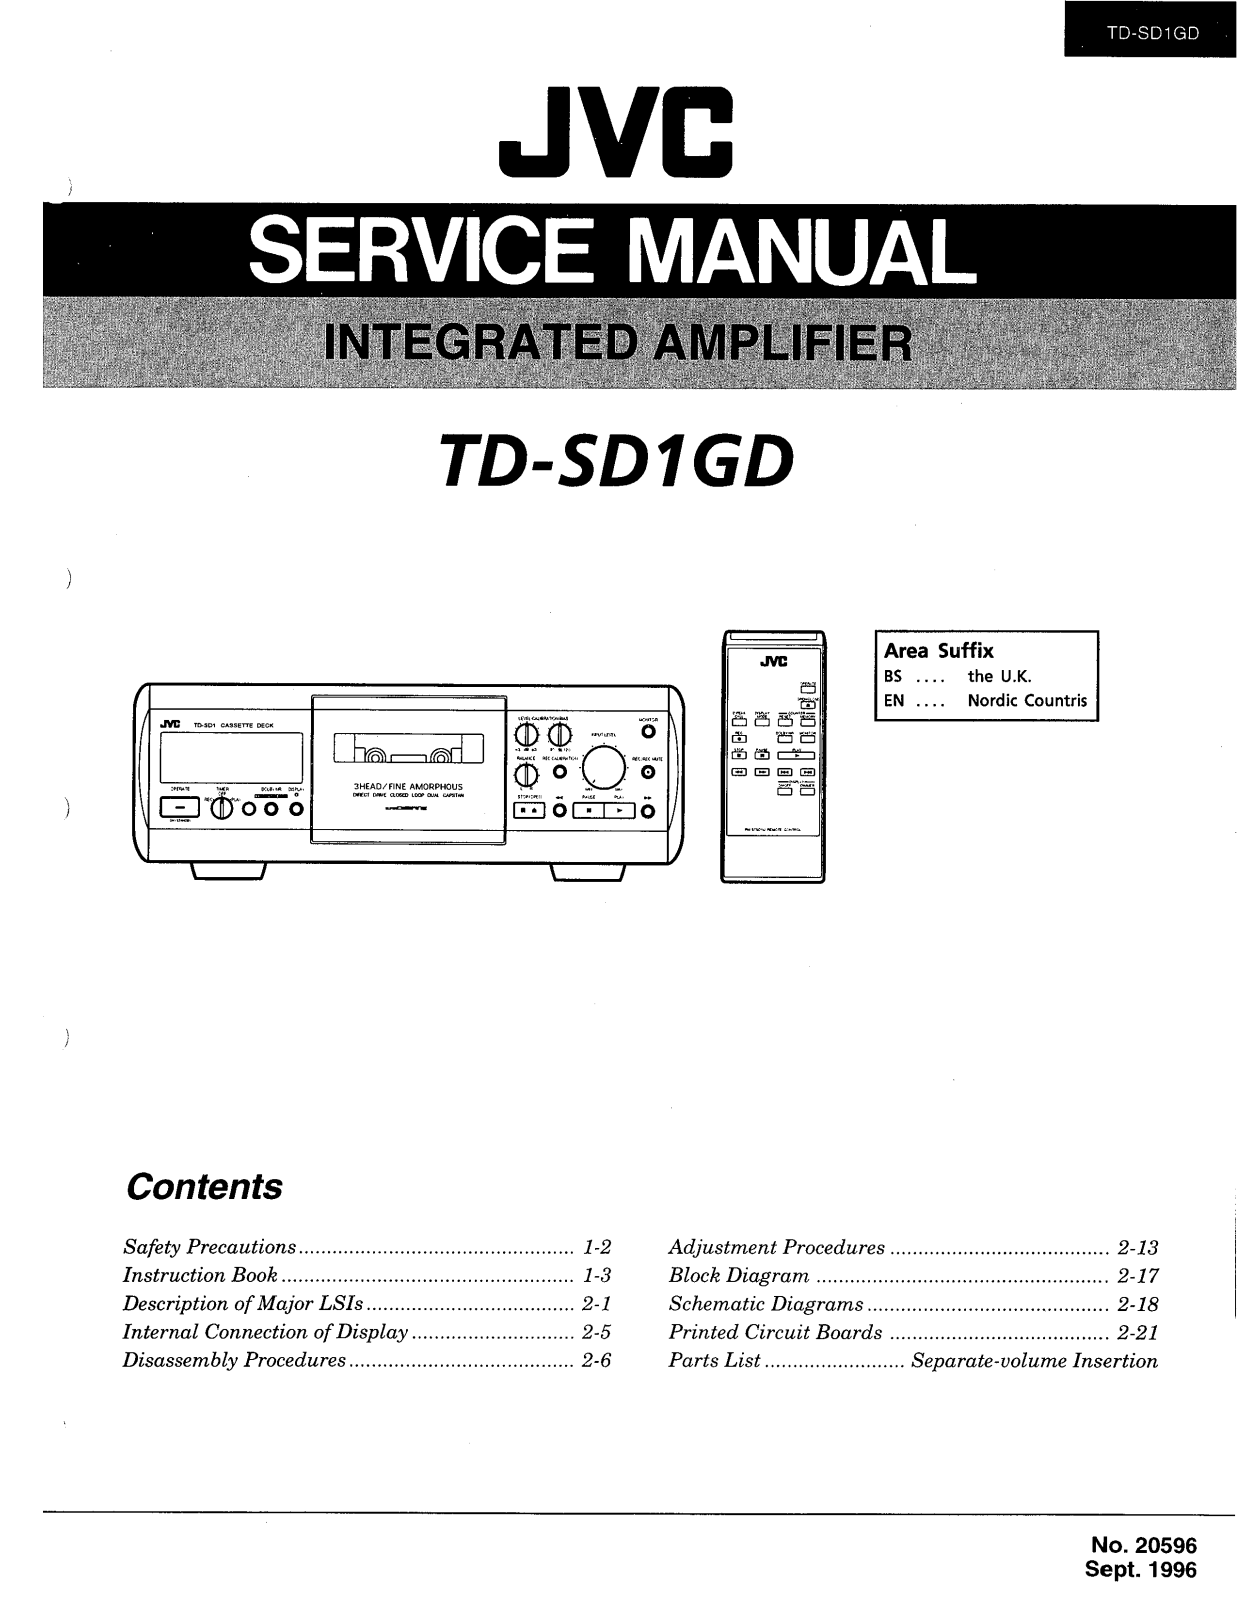 JVC TD-SD1GD Service Manual